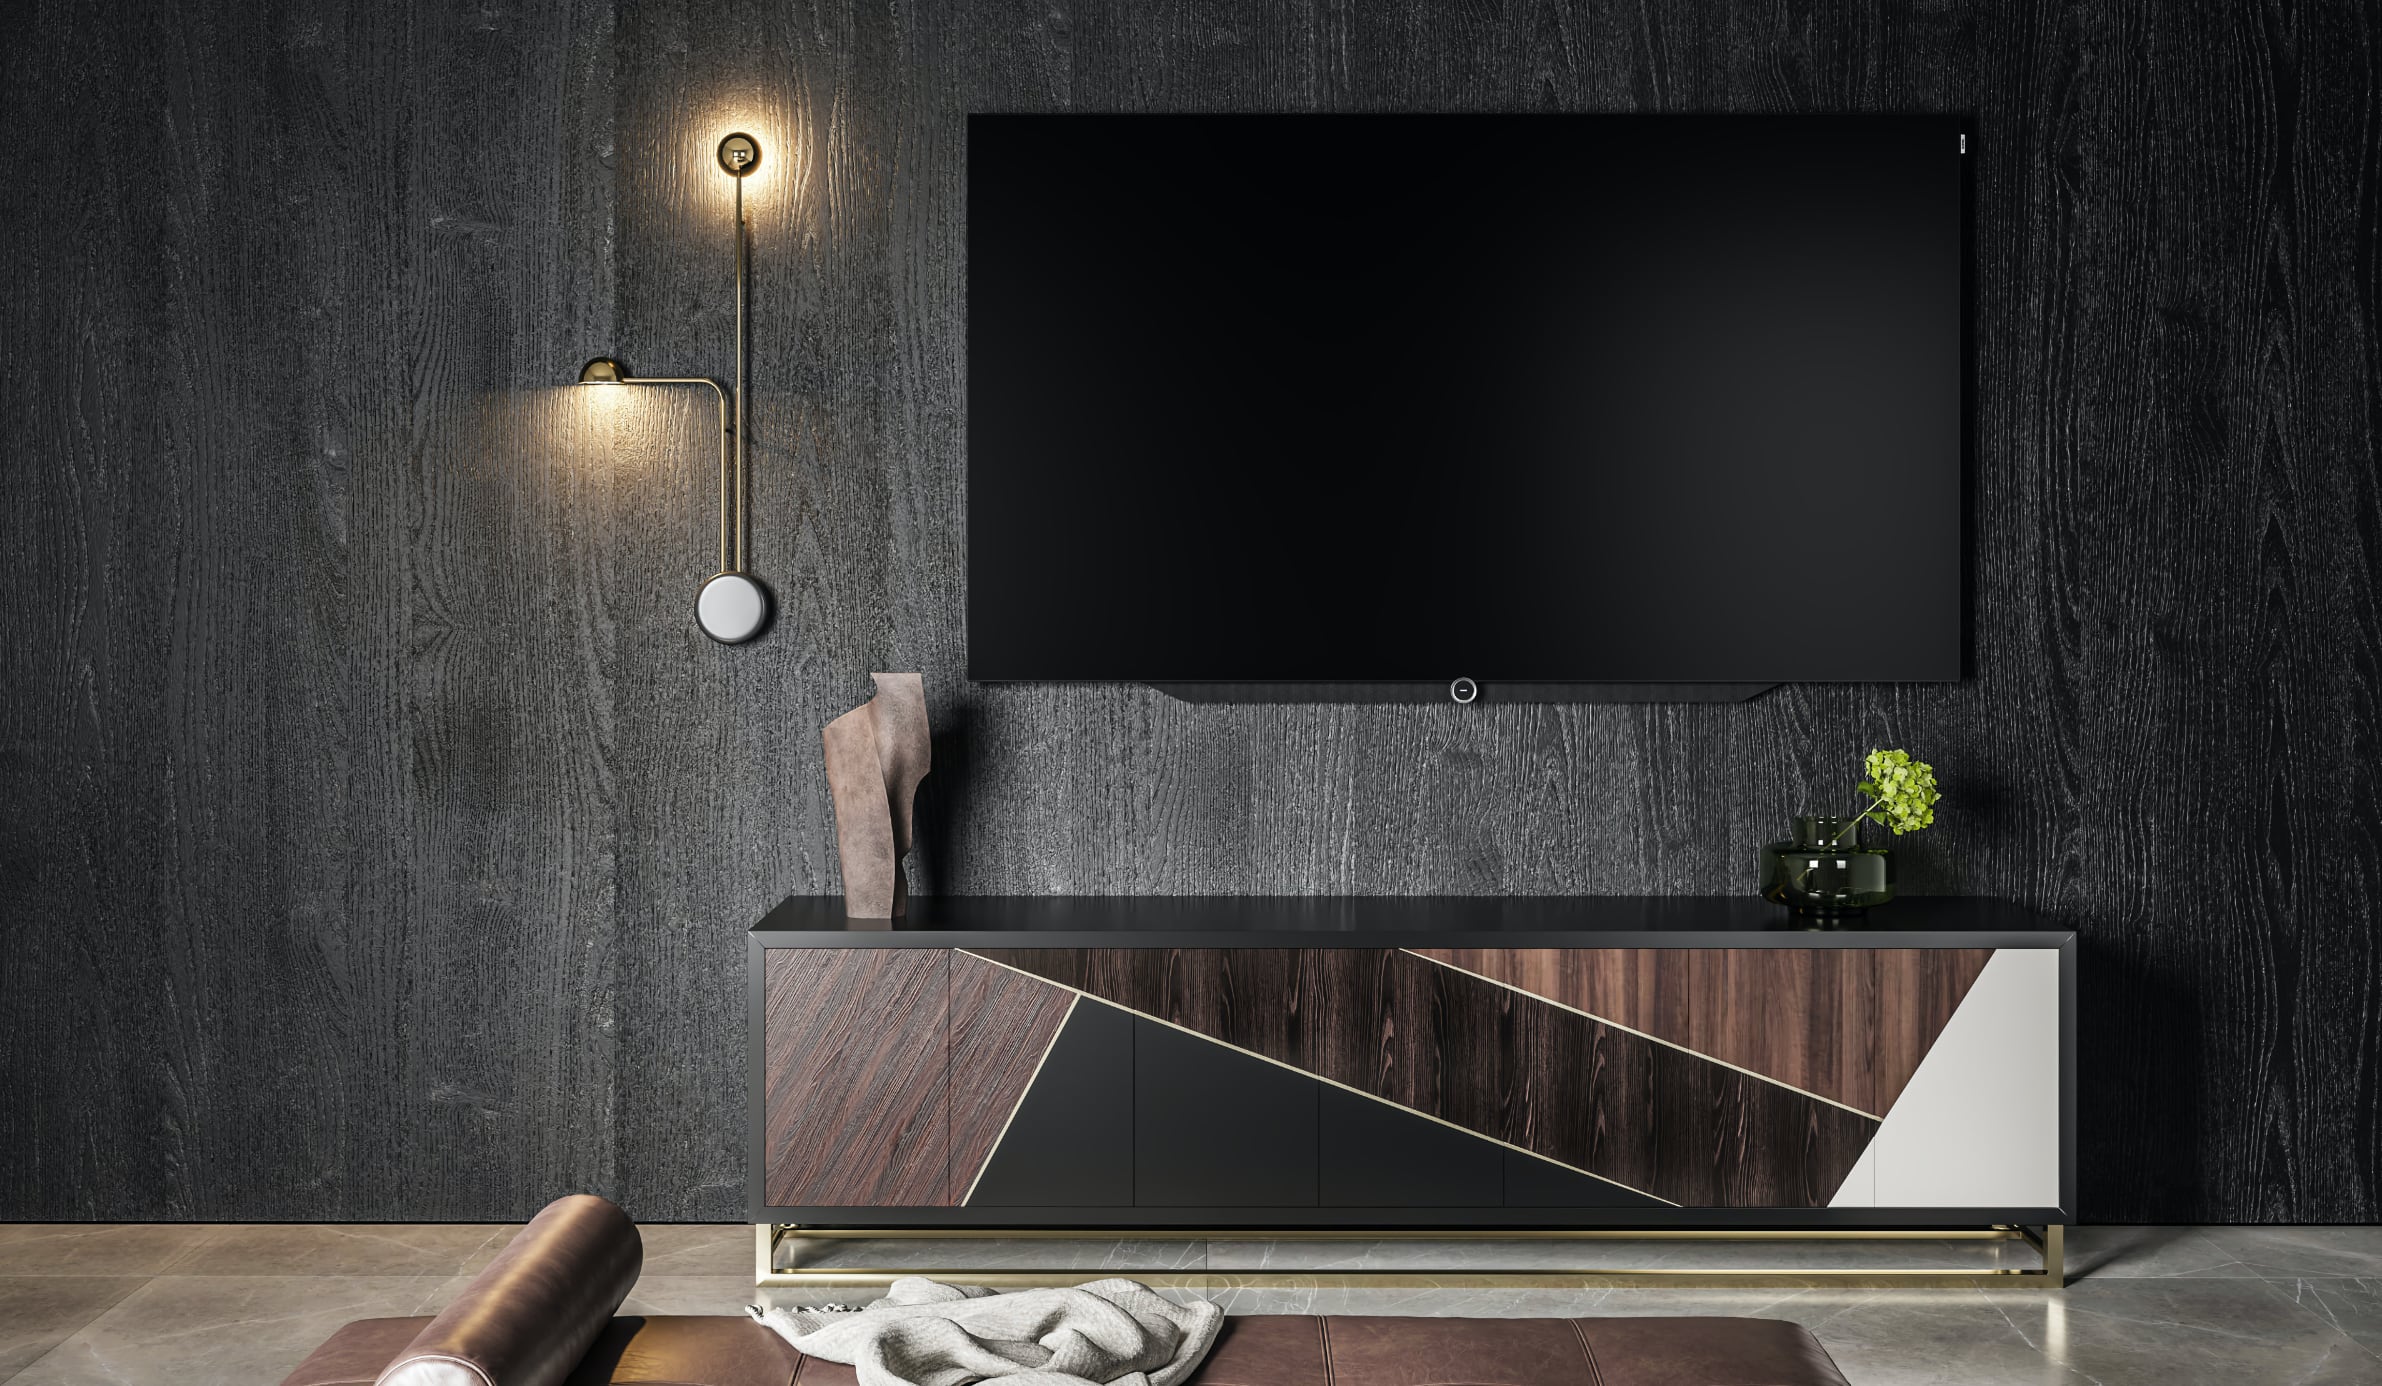 Loewe is back with new OLED TVs 